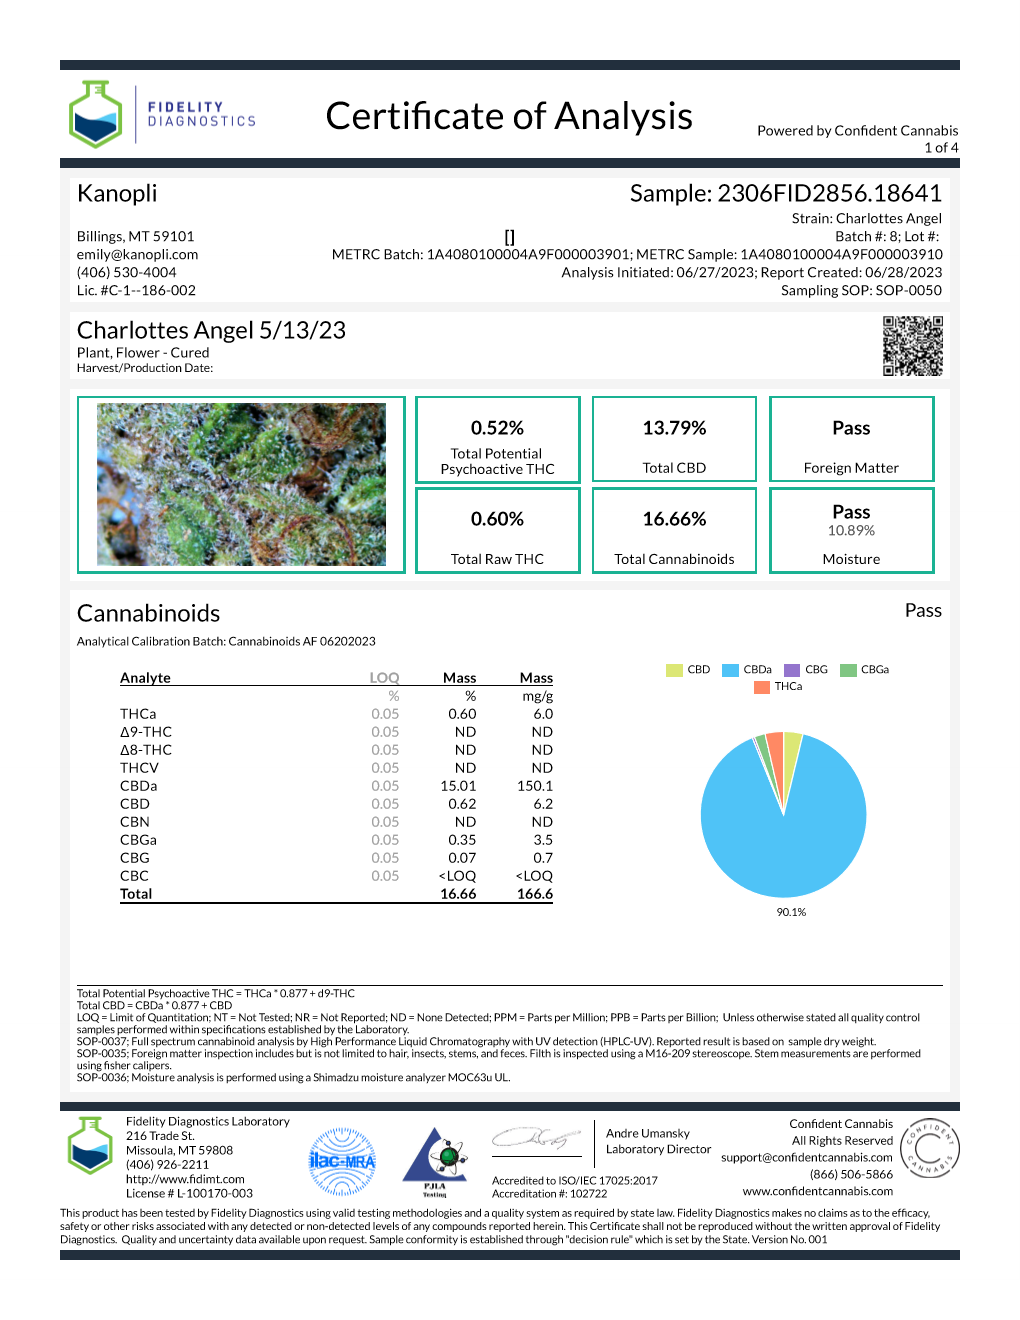 Charlotte's Angel - High CBD 15% CBDa (May 2023) shorties (2.5 grams)